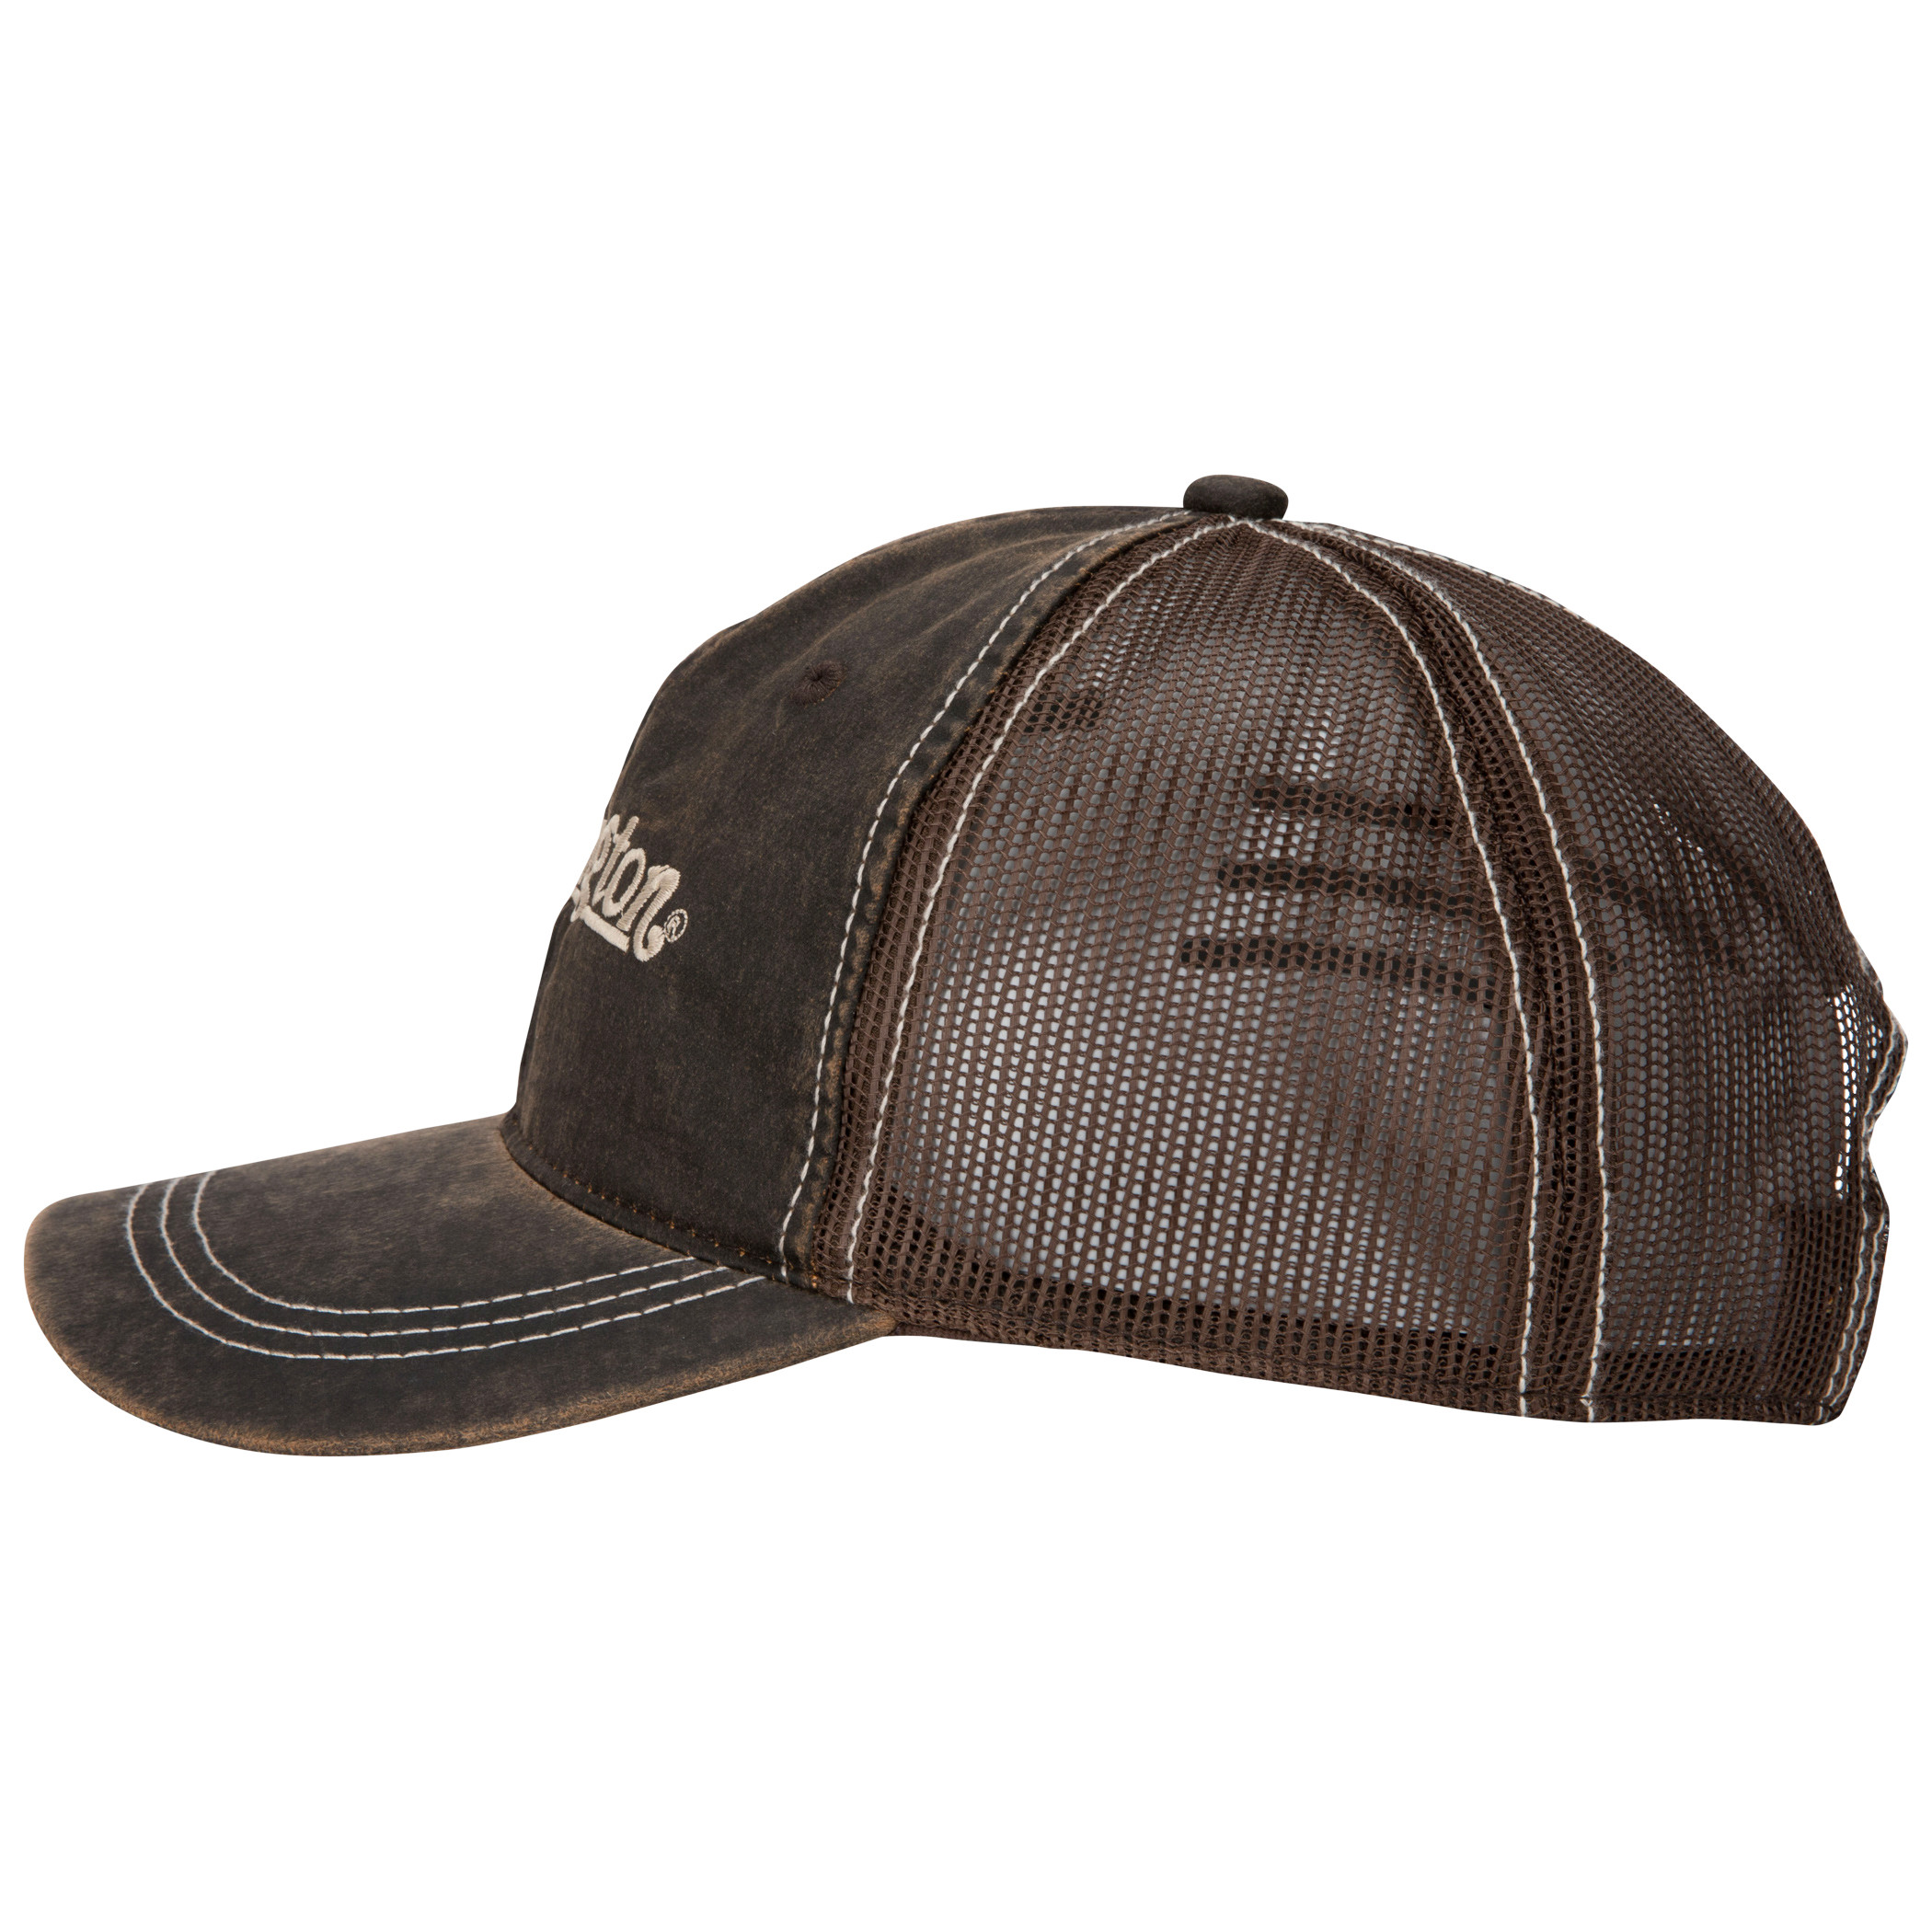 Remington Classic Logo Adjustable Hat